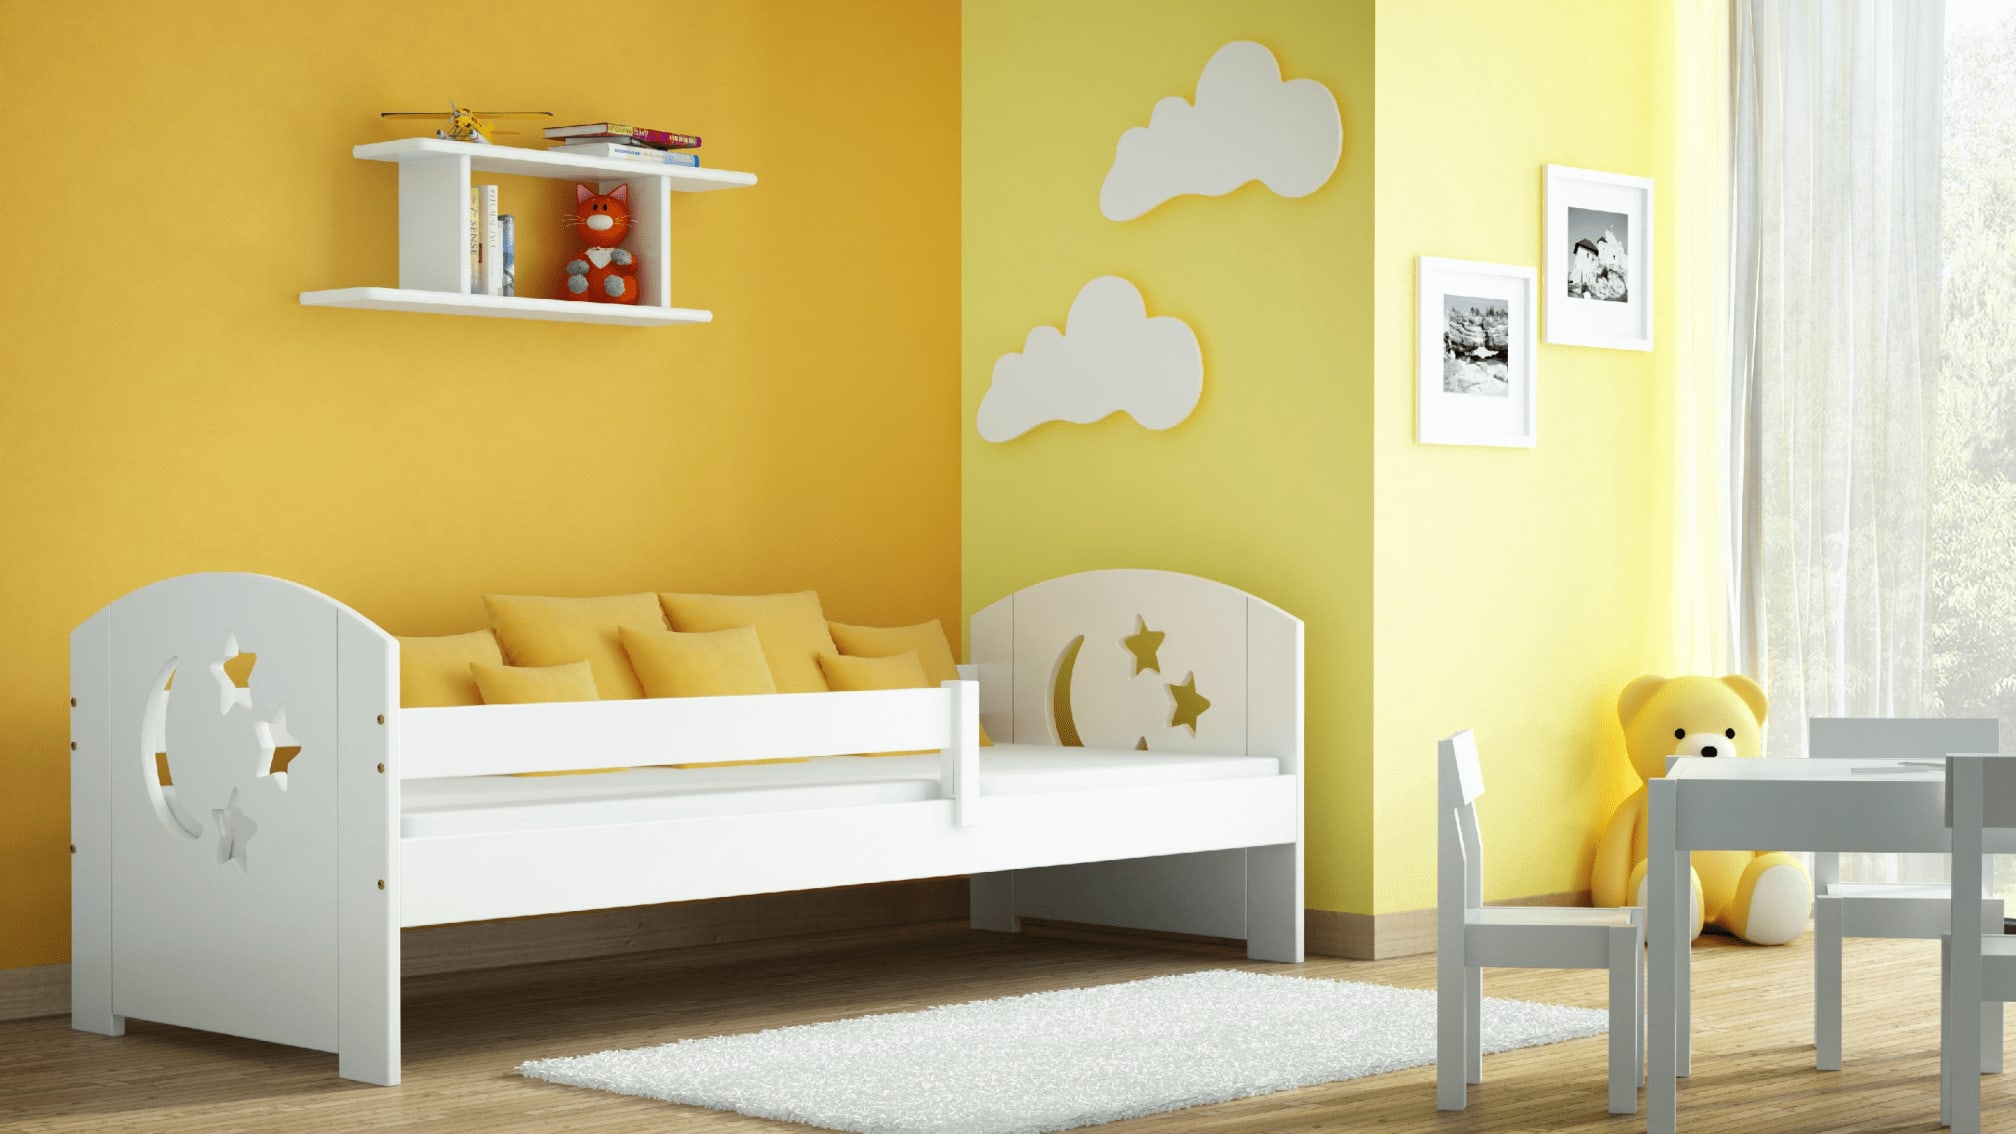 Images Children's Beds Home Ltd.